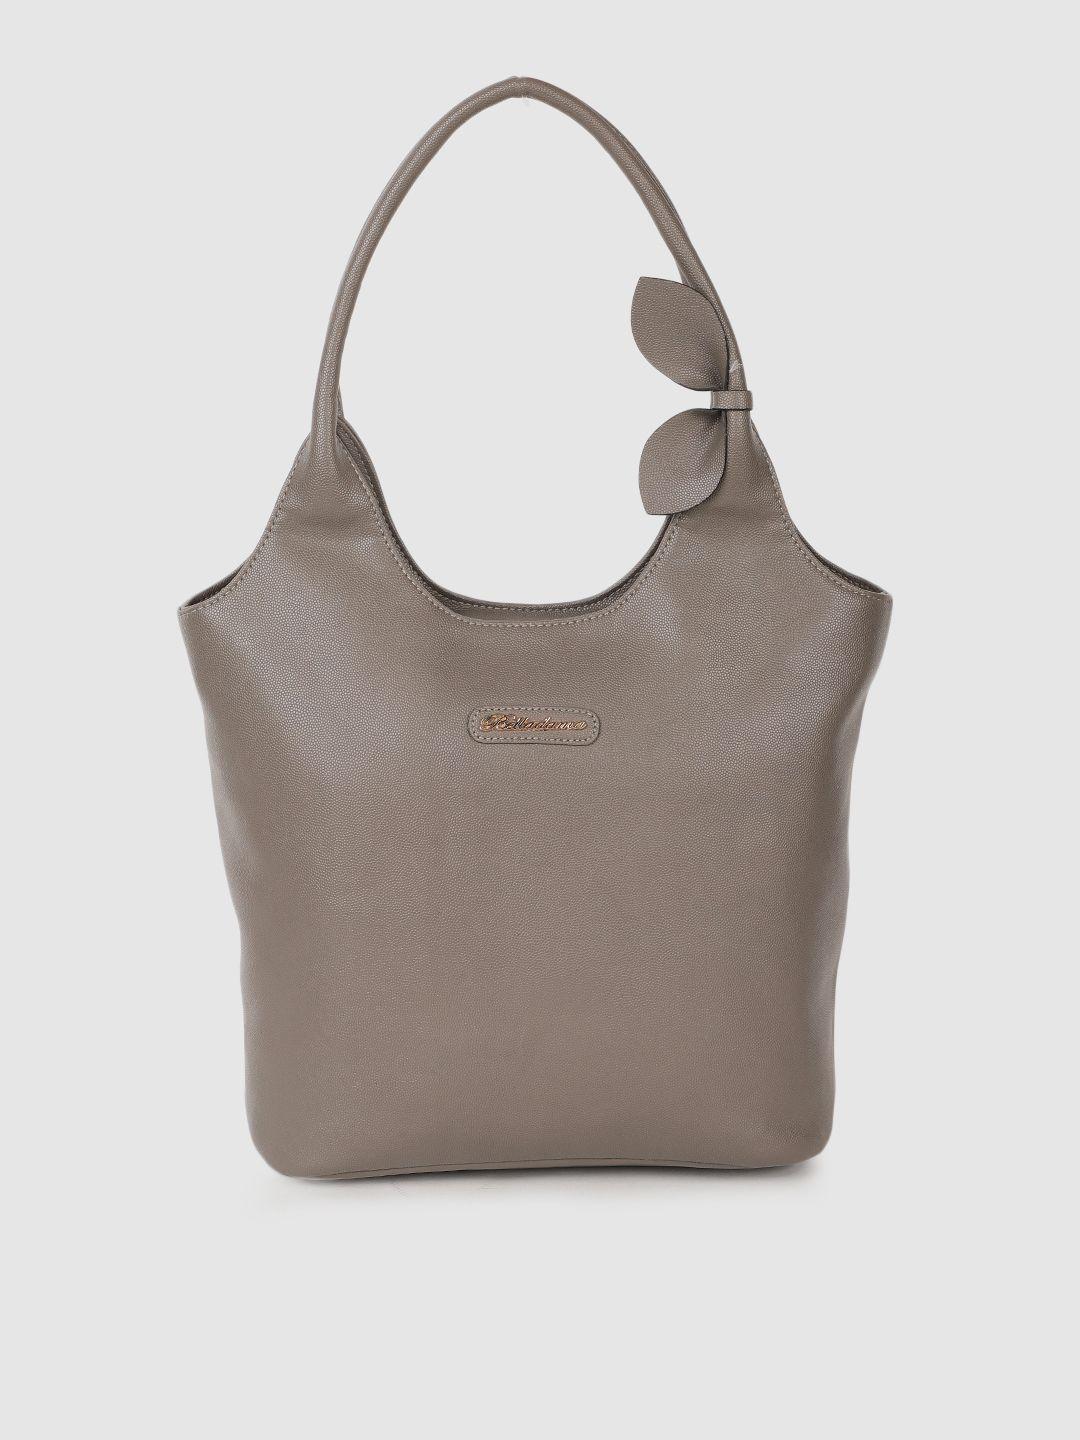 belladama grey shopper hobo bag